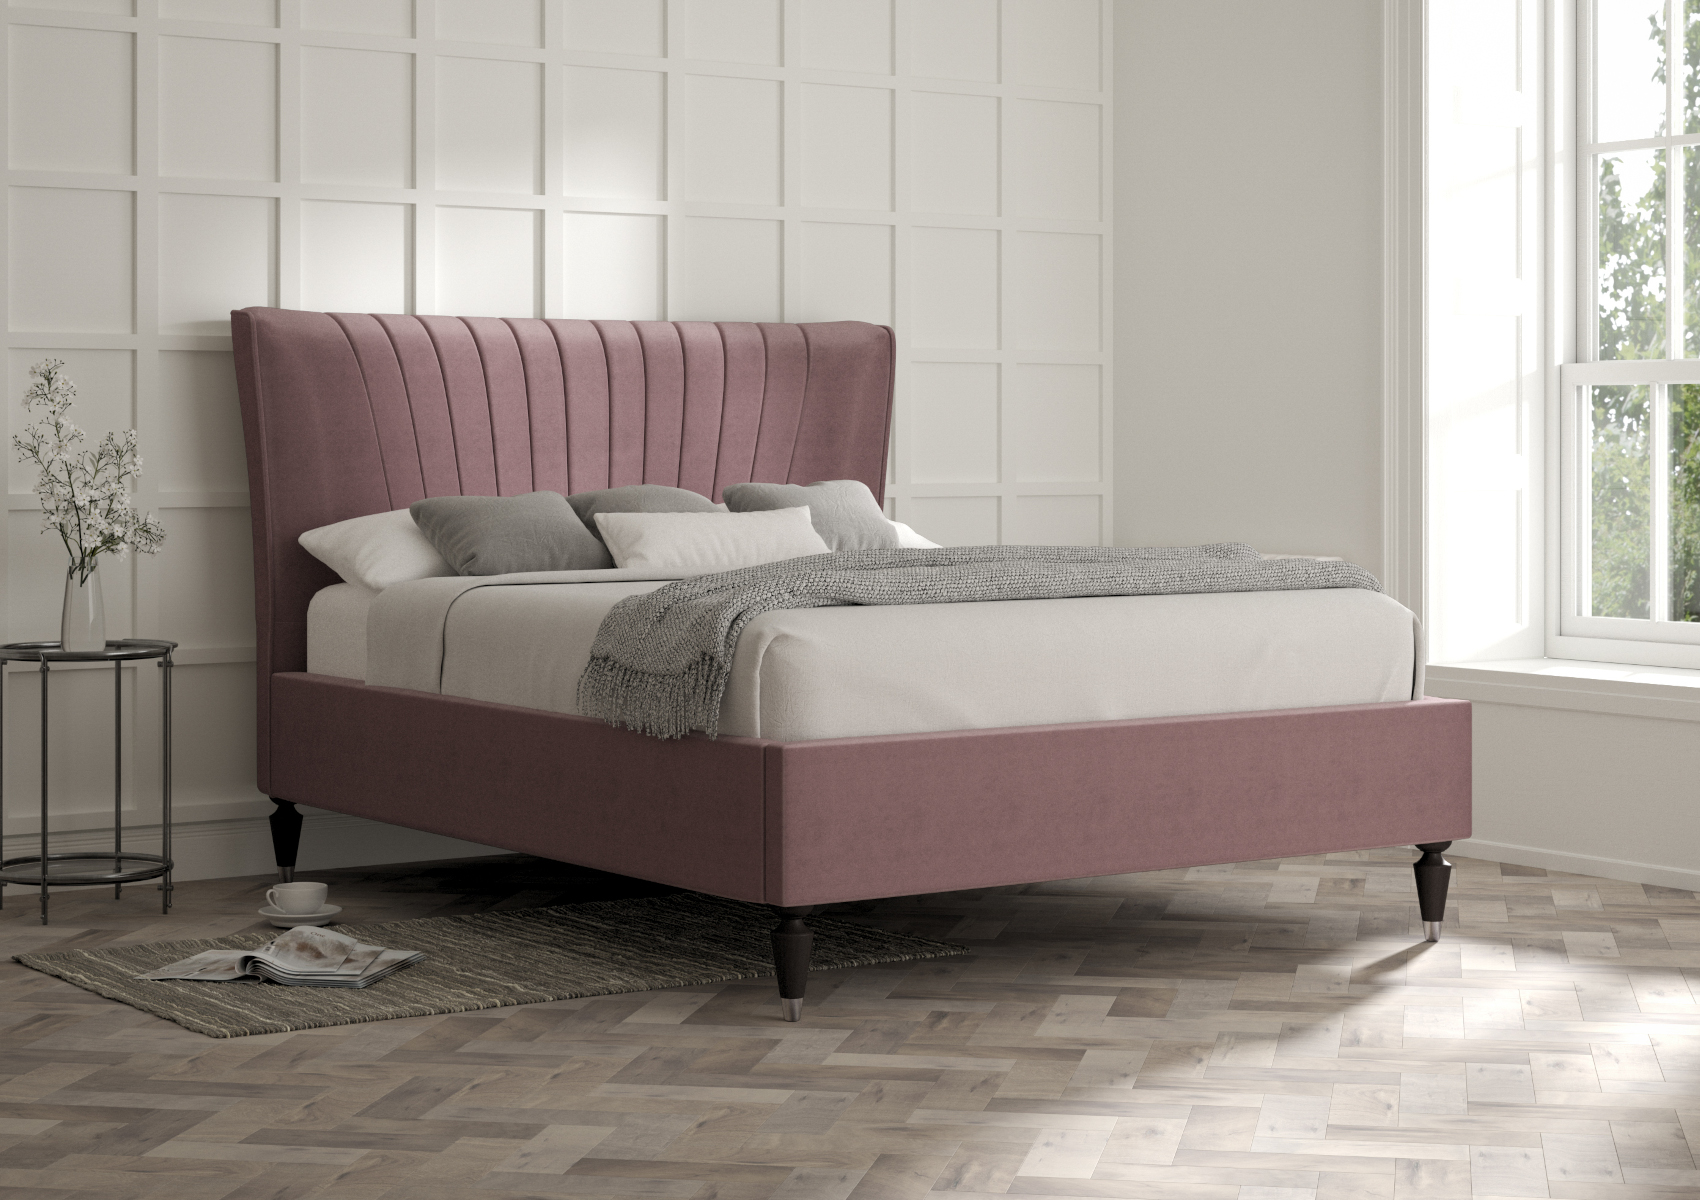 View Melbury Arran Natural Upholstered Super King Bed Time4Sleep information